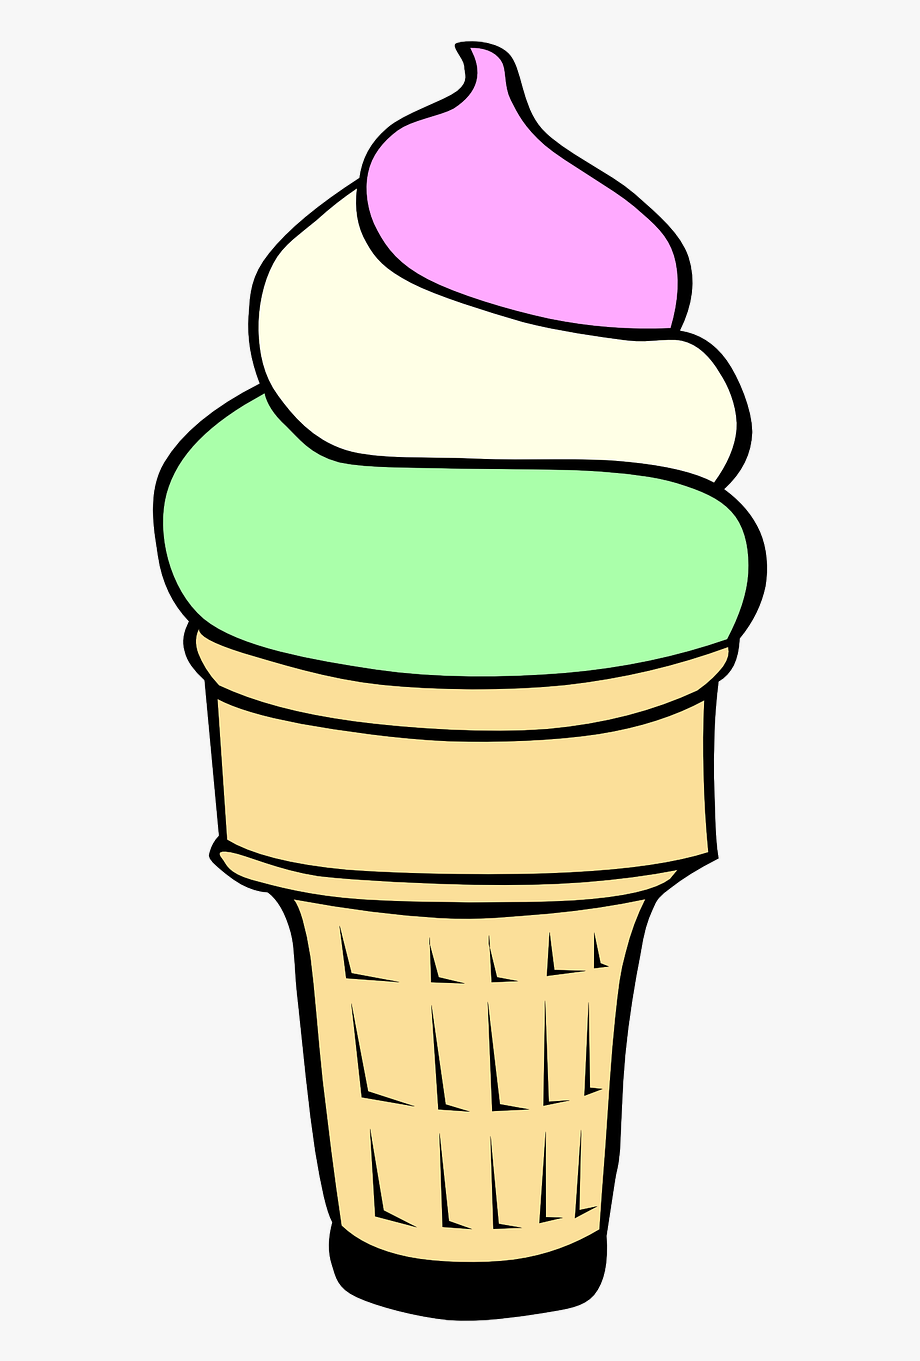 icecream clipart clip art